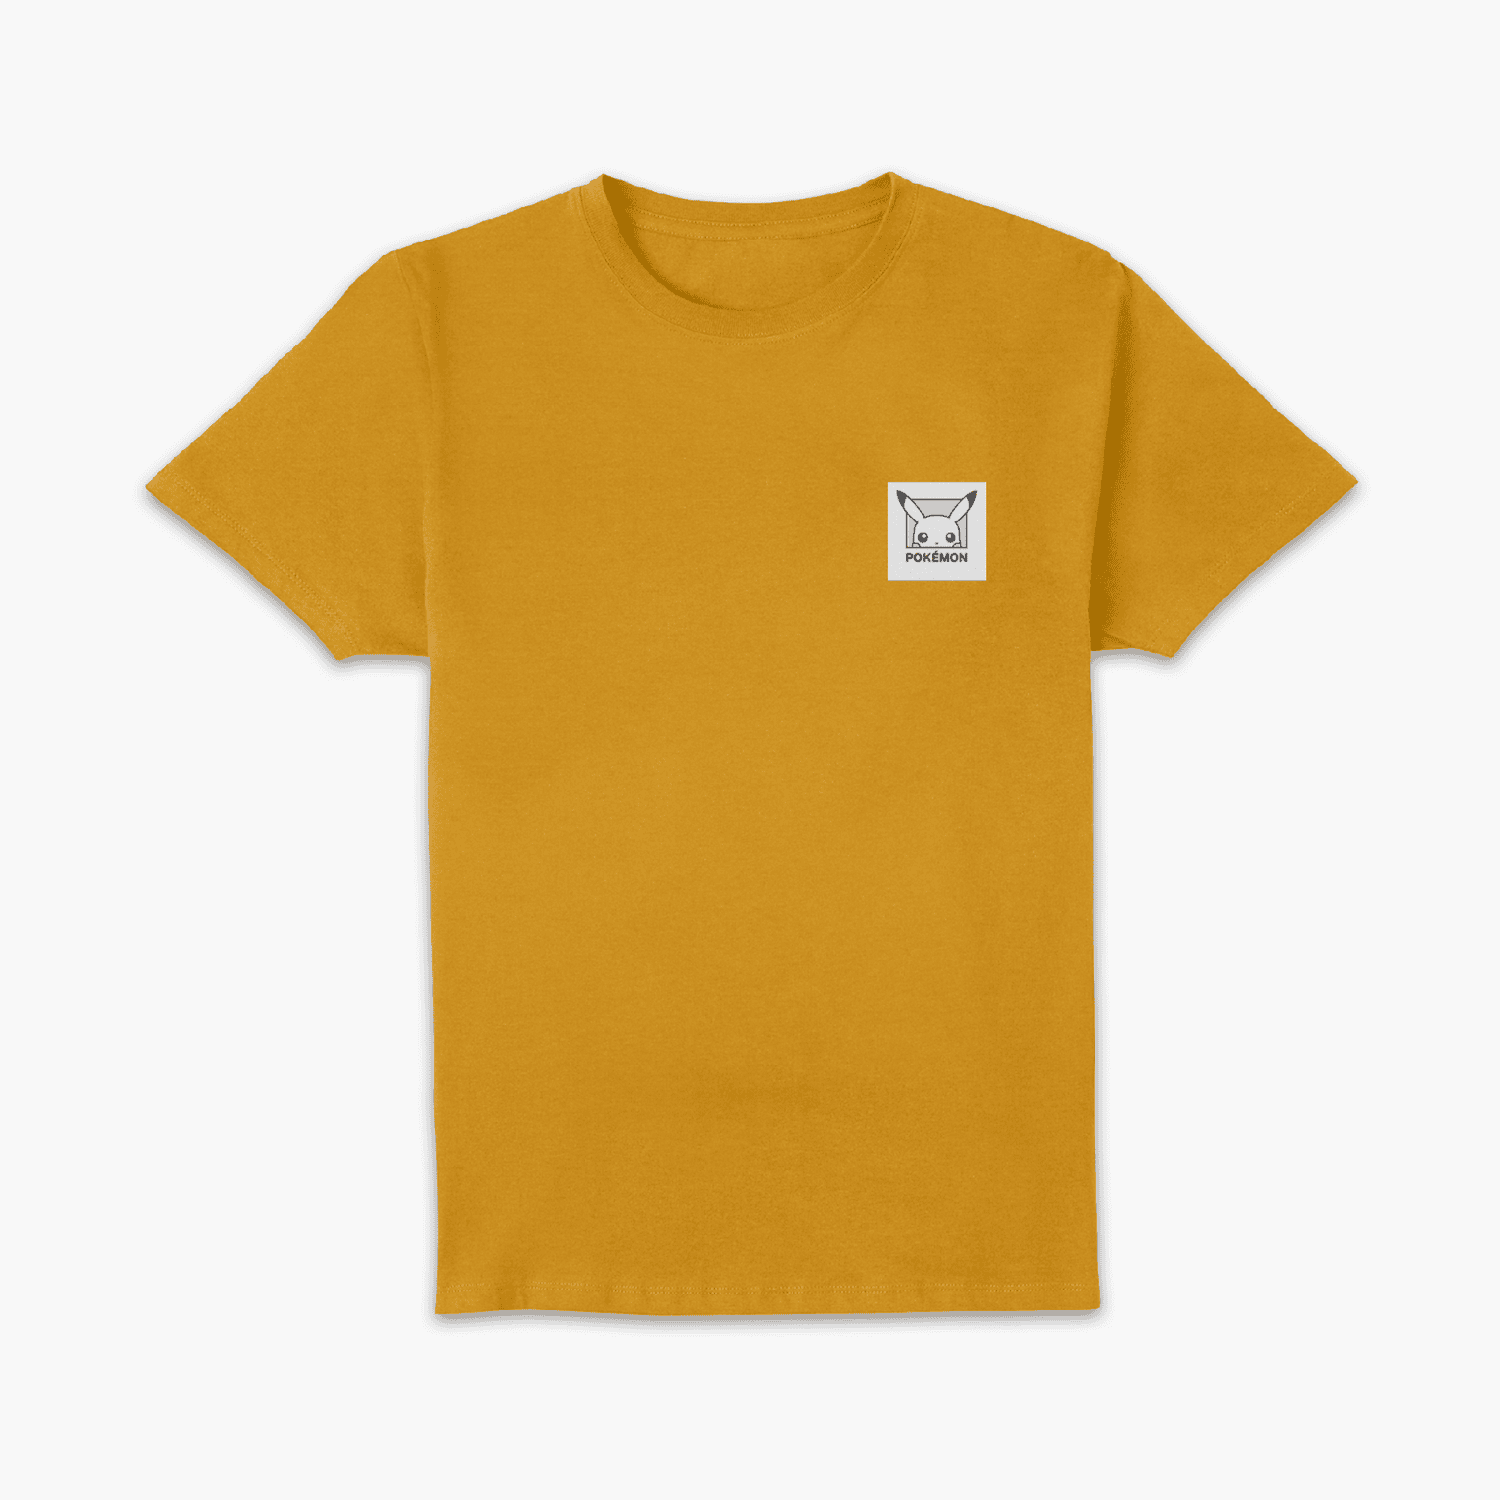 Pokémon Pikachu Patch Unisex T-Shirt - Mustard